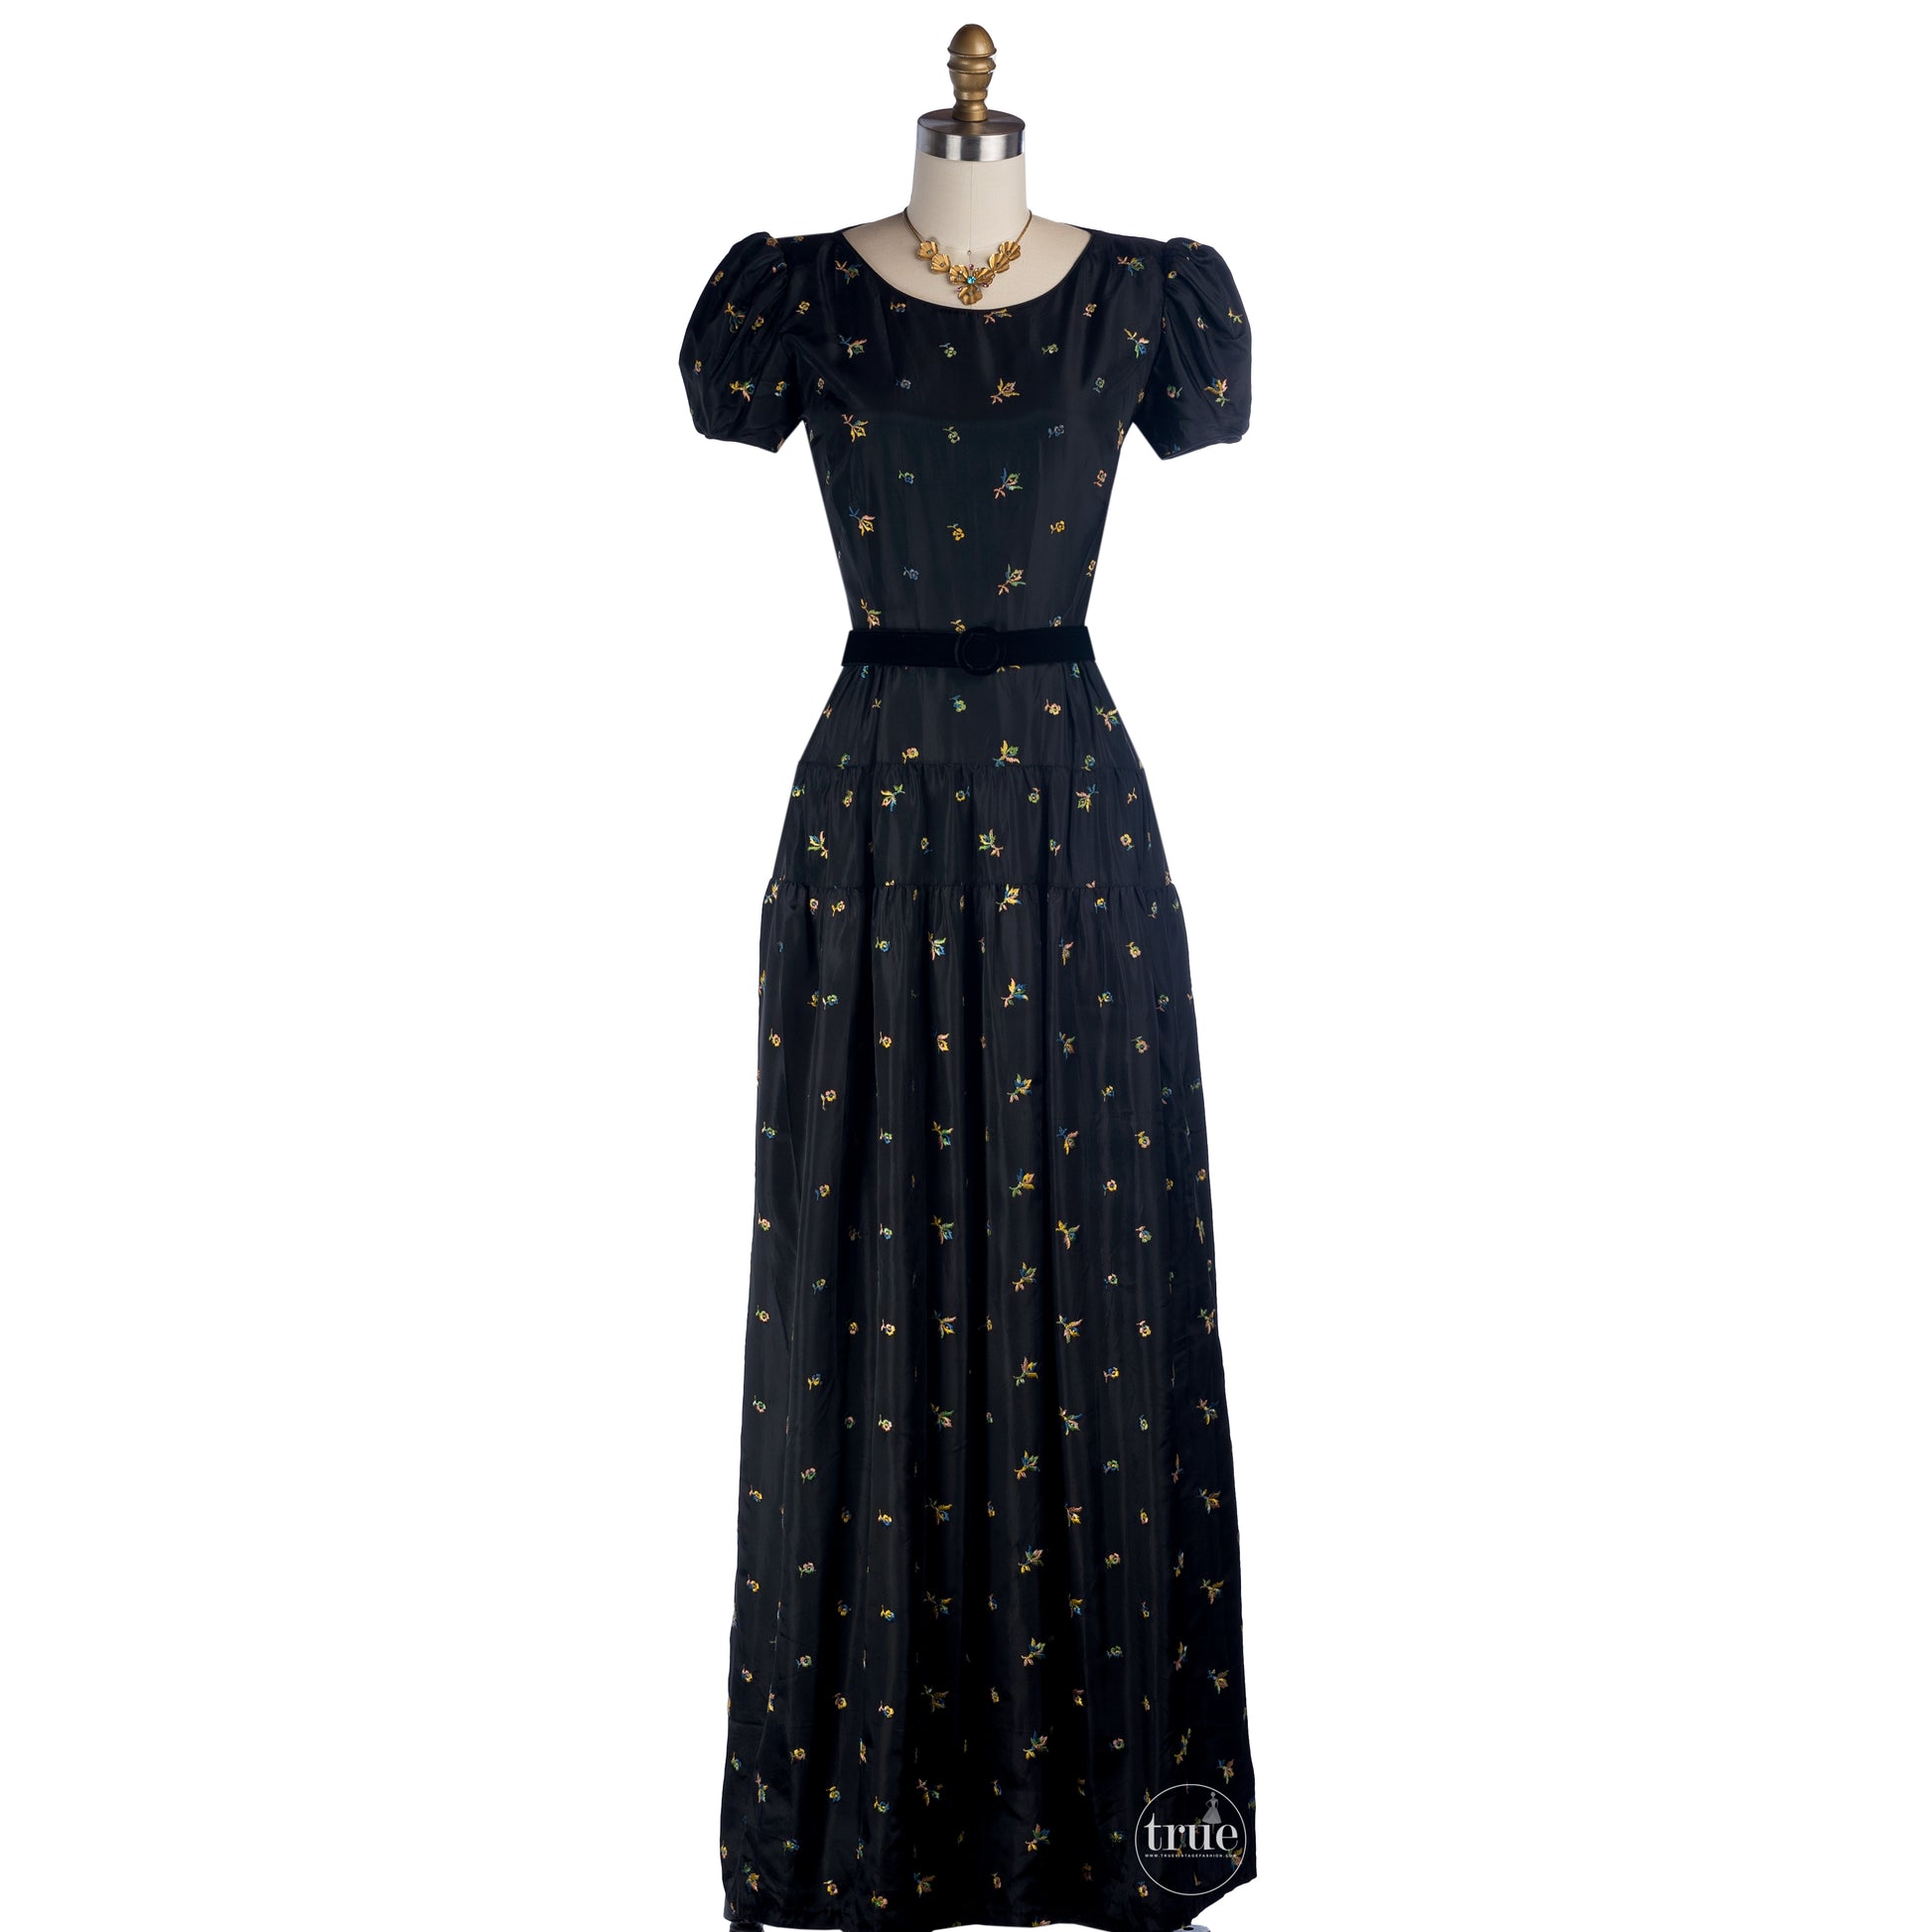 true vintage 1930's dress